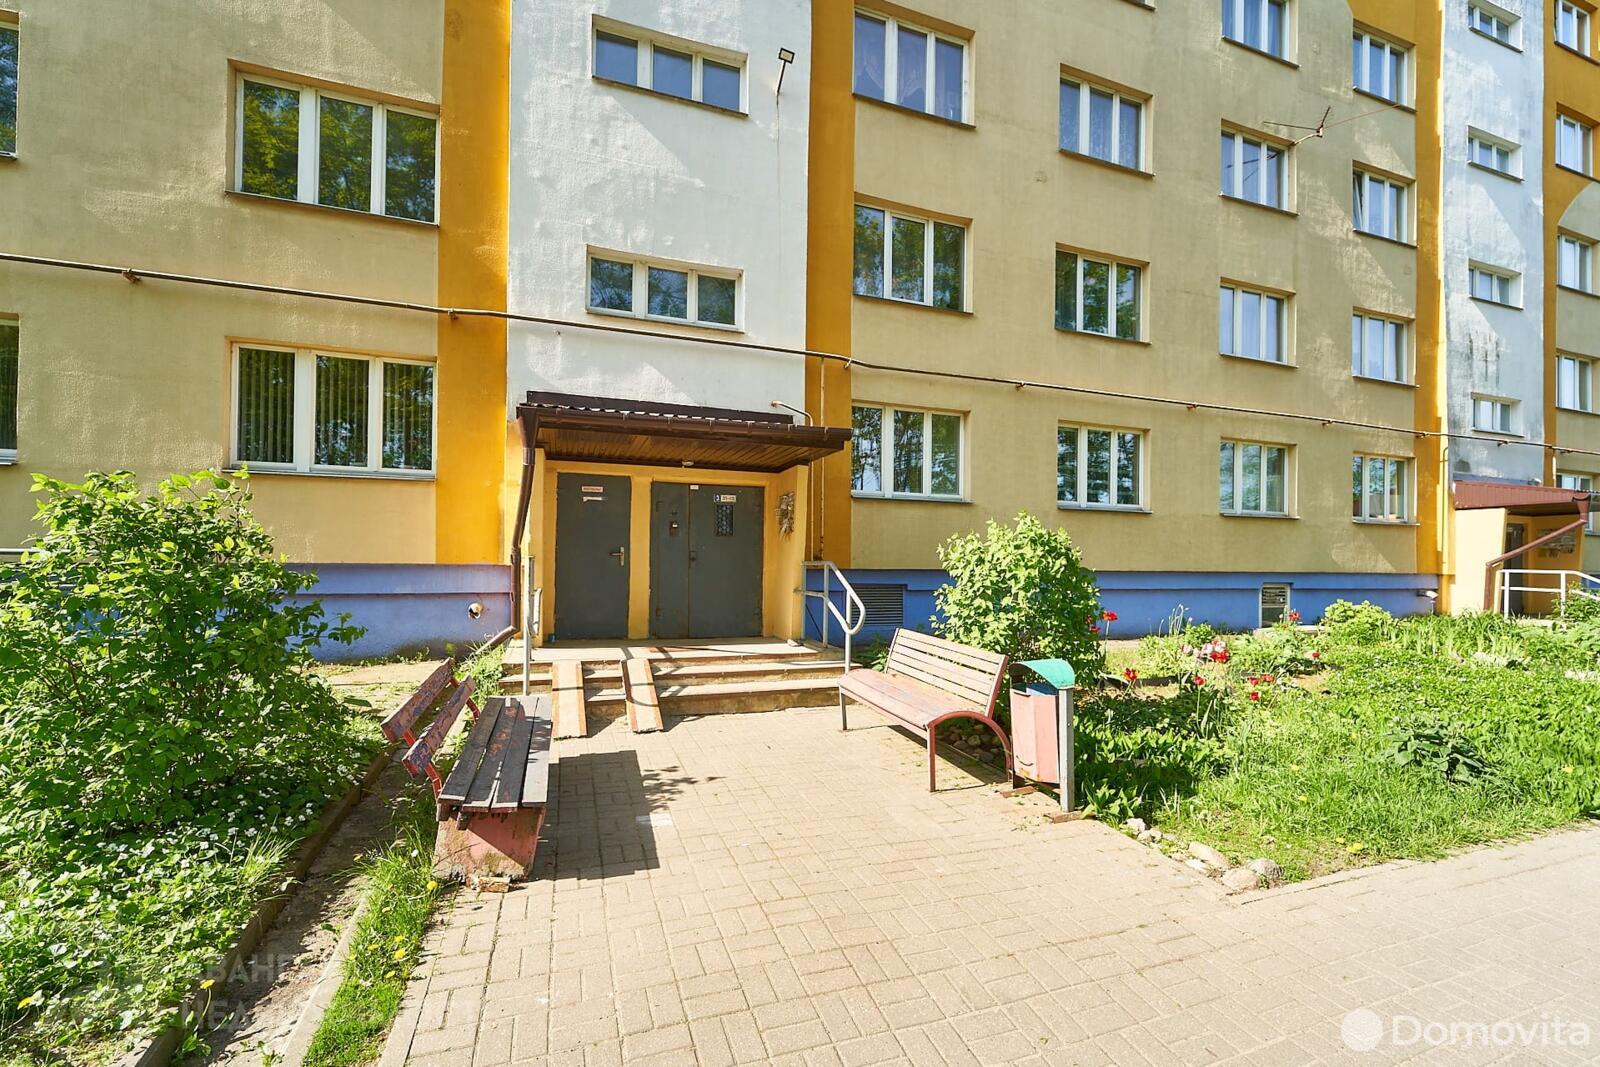 квартира, Минск, ул. Брикета, д. 4, стоимость продажи 208 533 р.